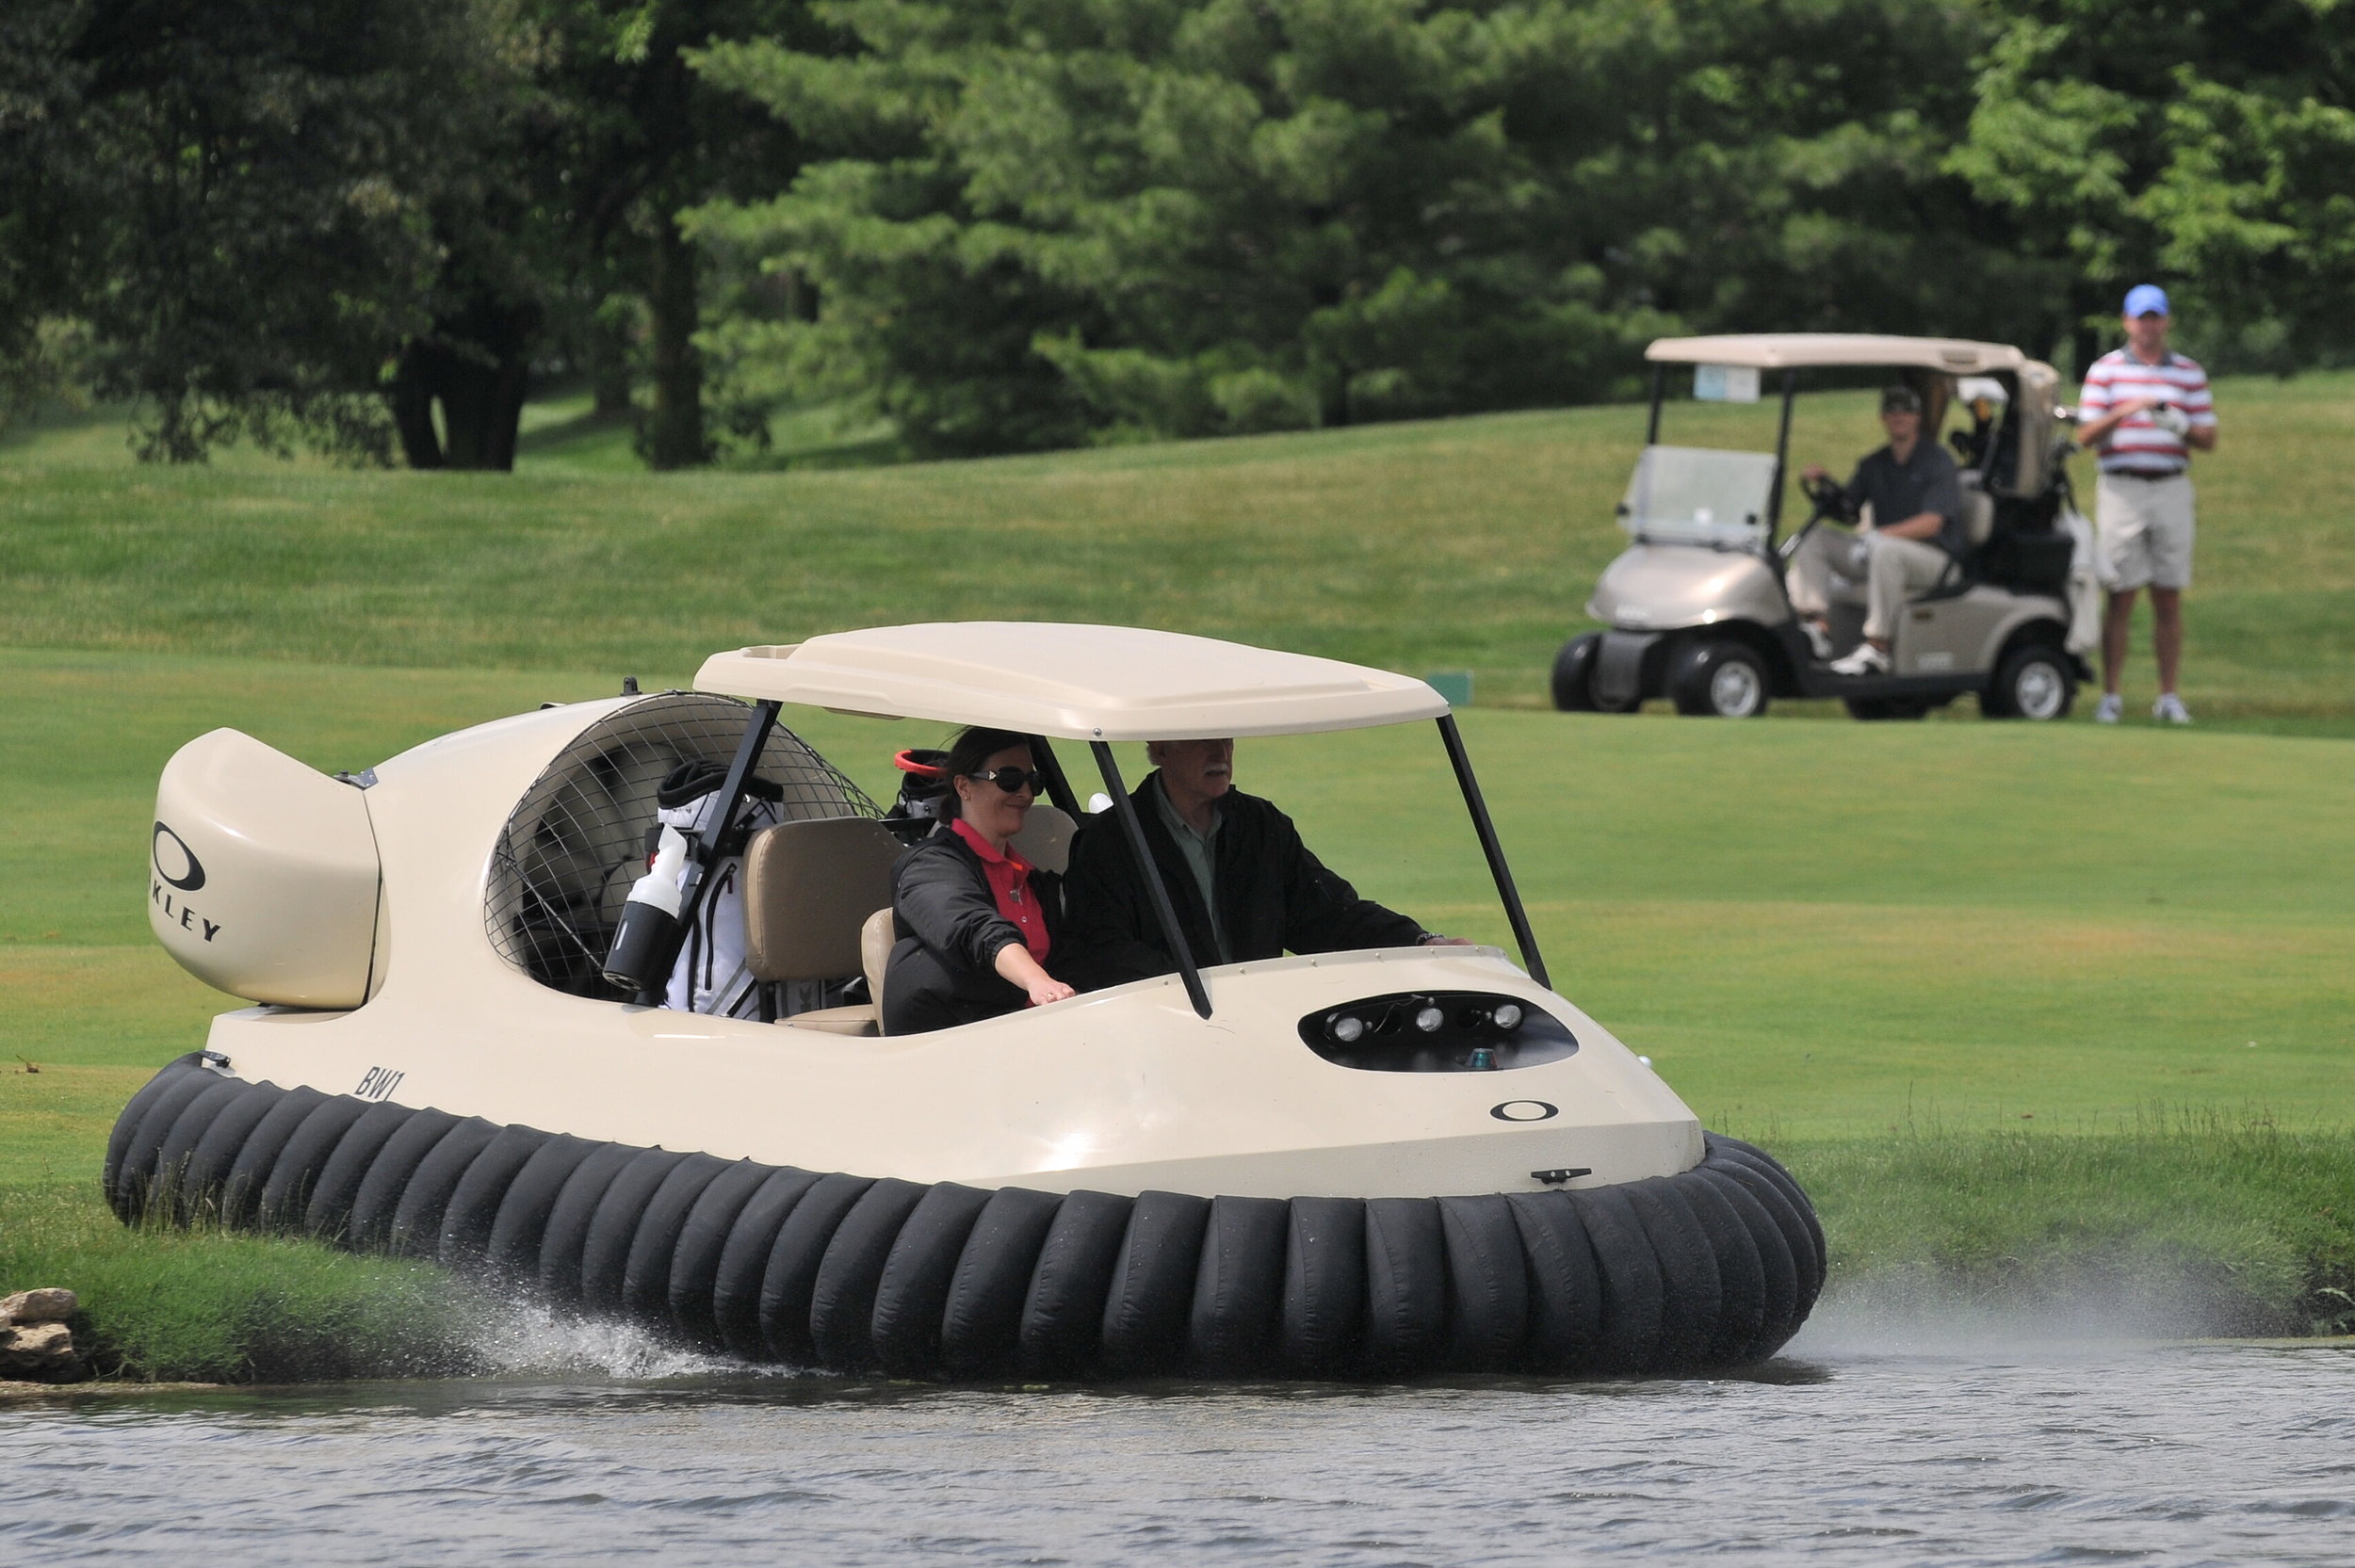  Bubba Watson's hovercraft on golf course in Springfield, Ohio, USA 